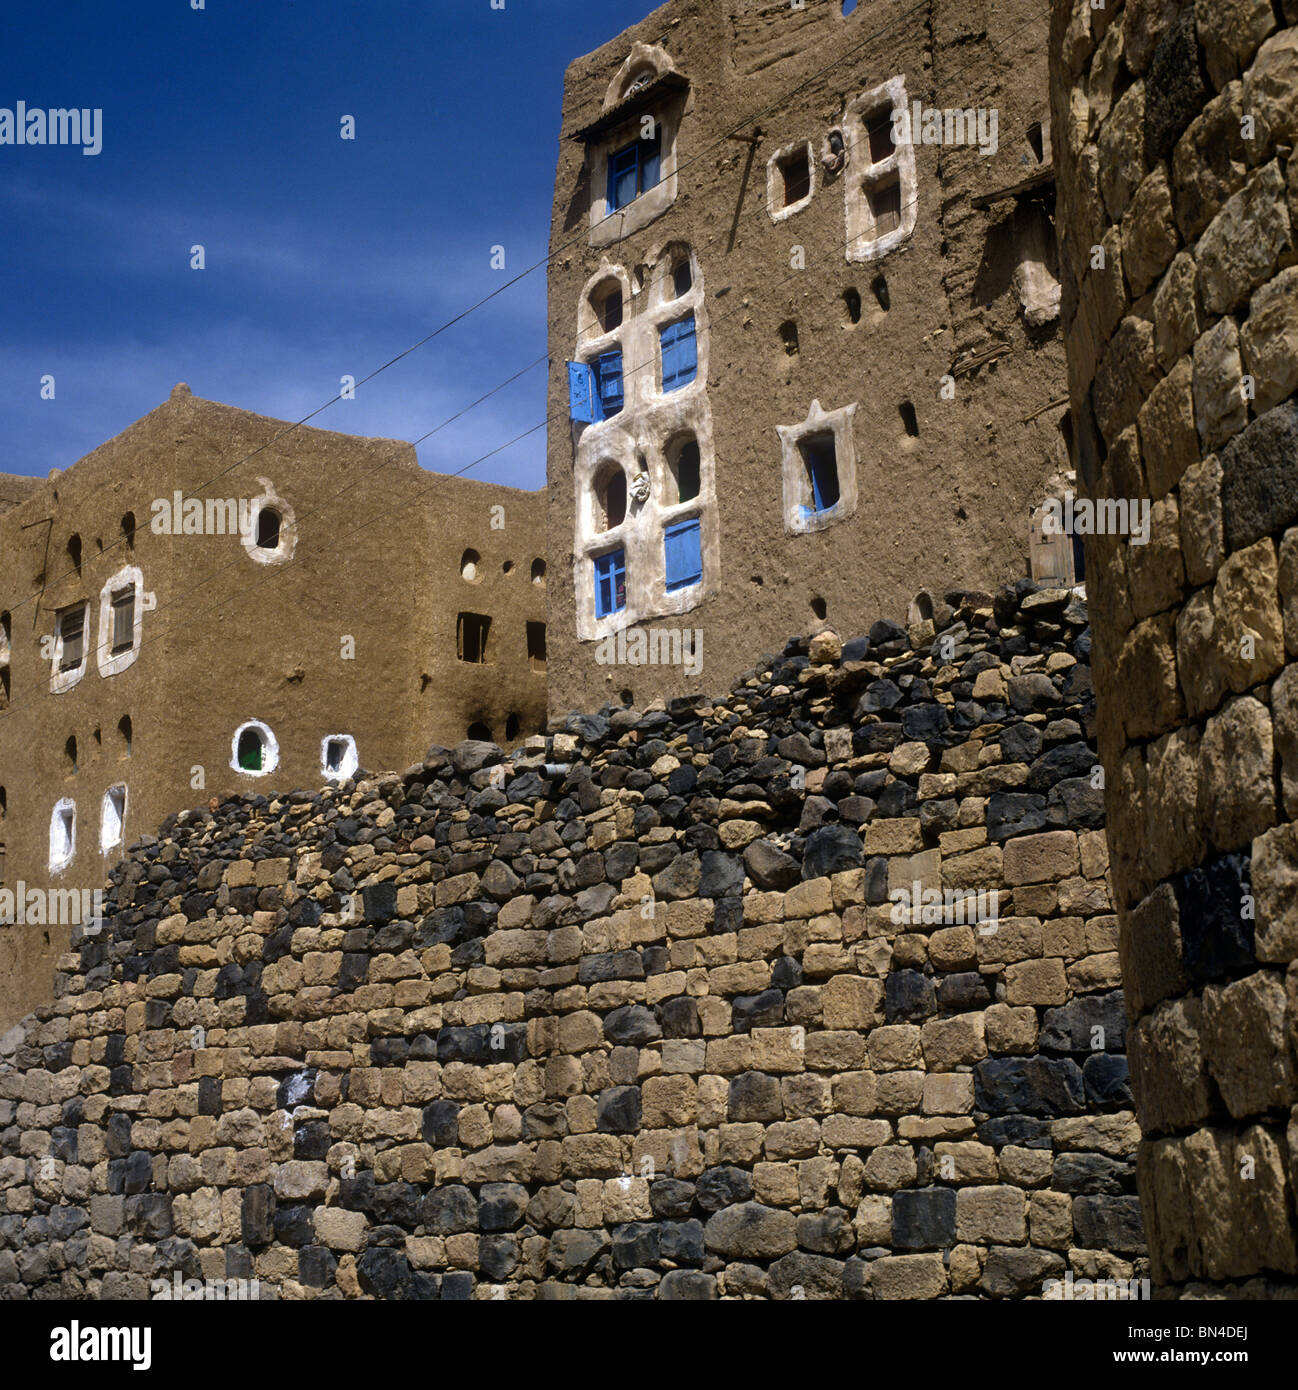 Town wall Amran Yemen Stock Photo